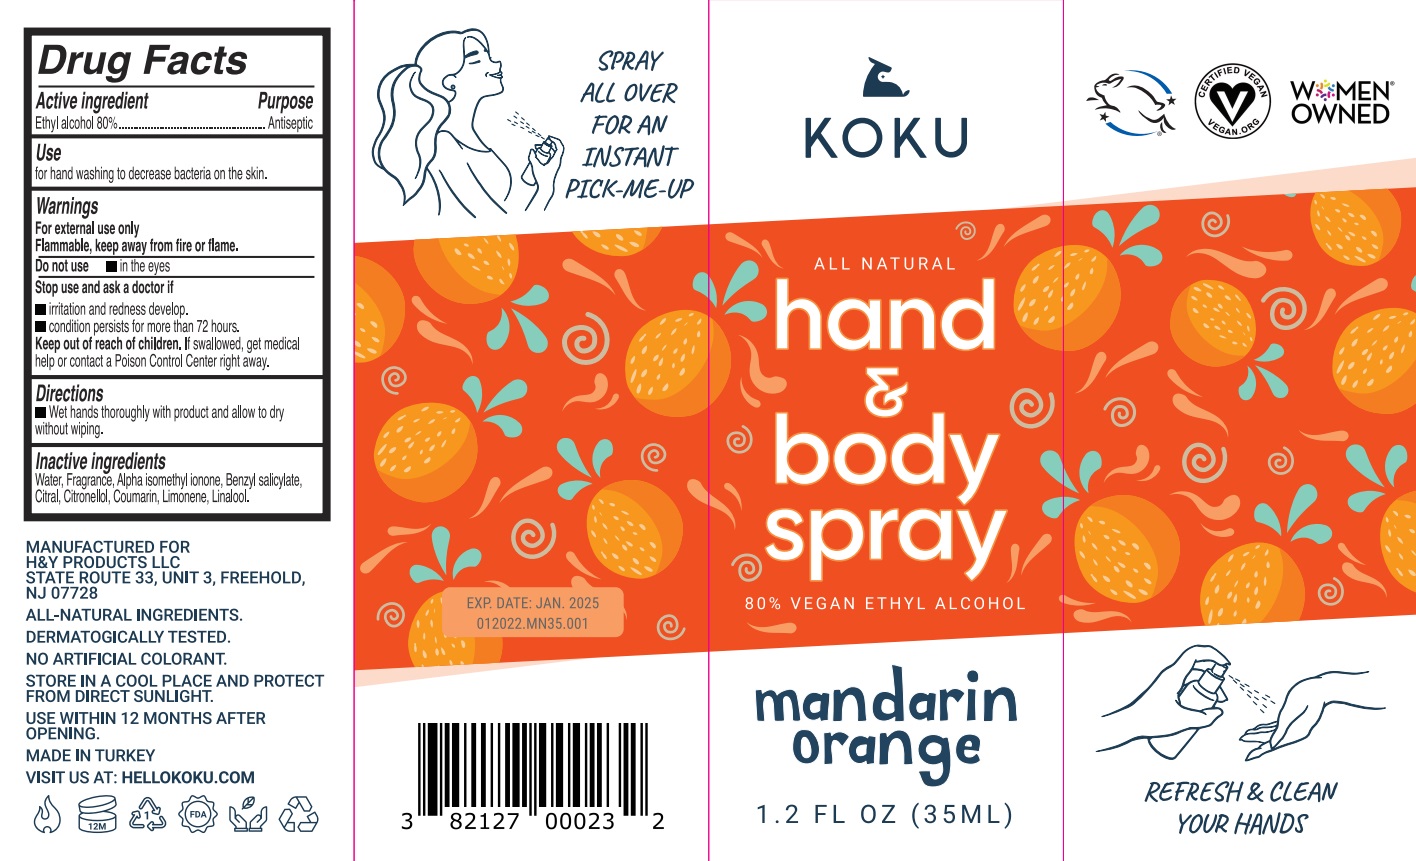 Koku All-Natural mandarin orange 1.2 box